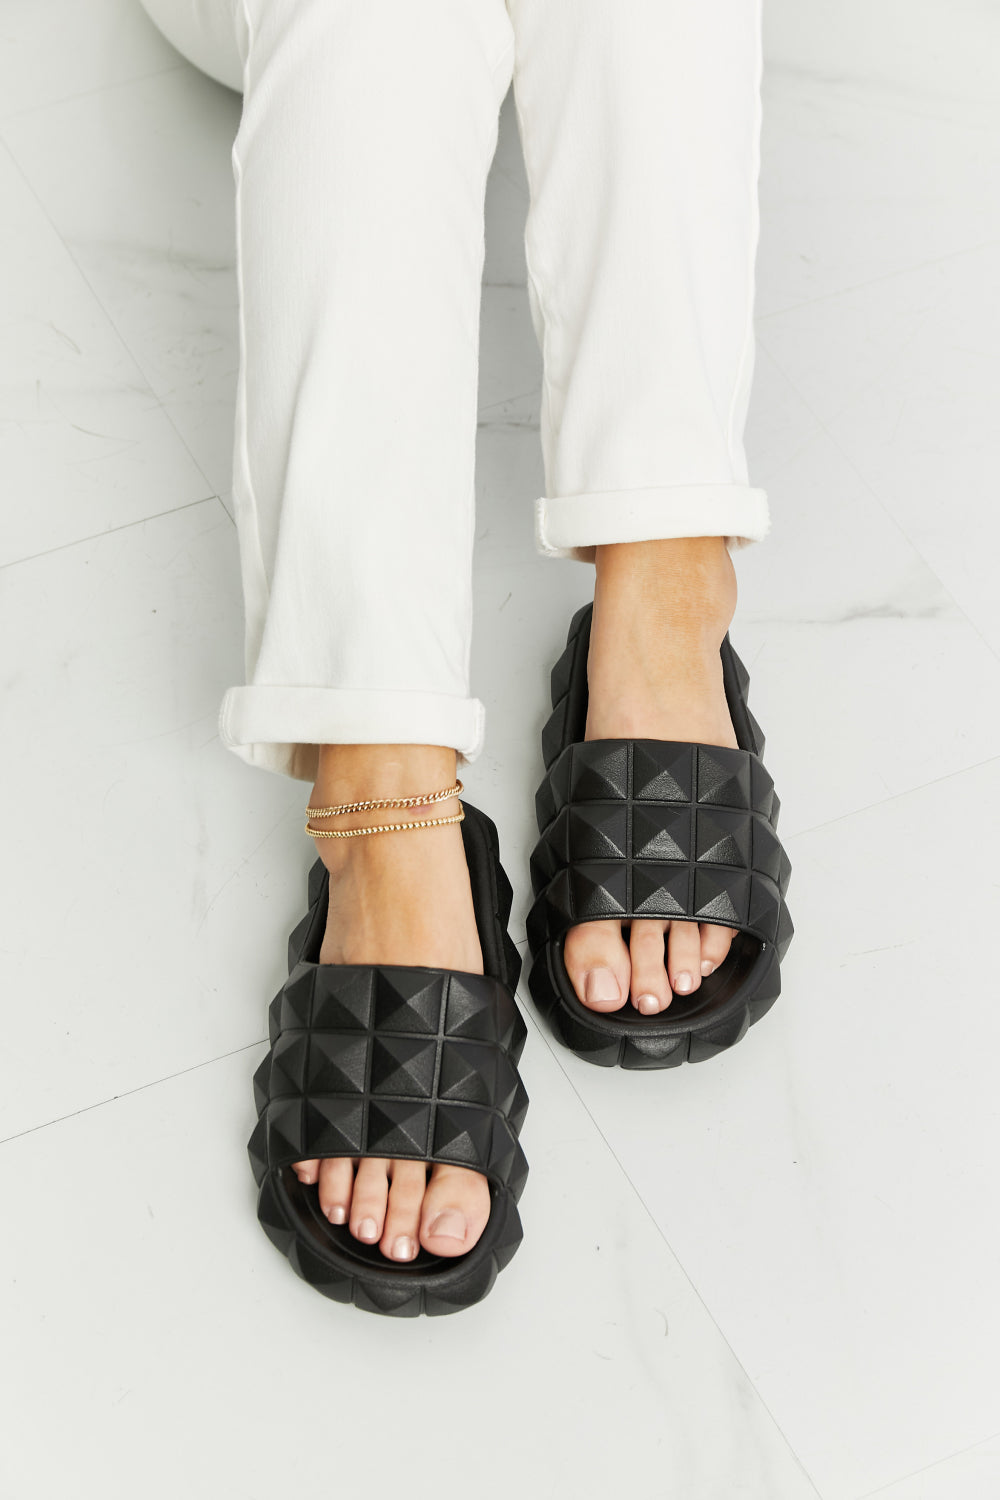 Legend 3D Stud Style Platform Chunky Thick Sole Slide On Flat Black Sandals Let's Chill